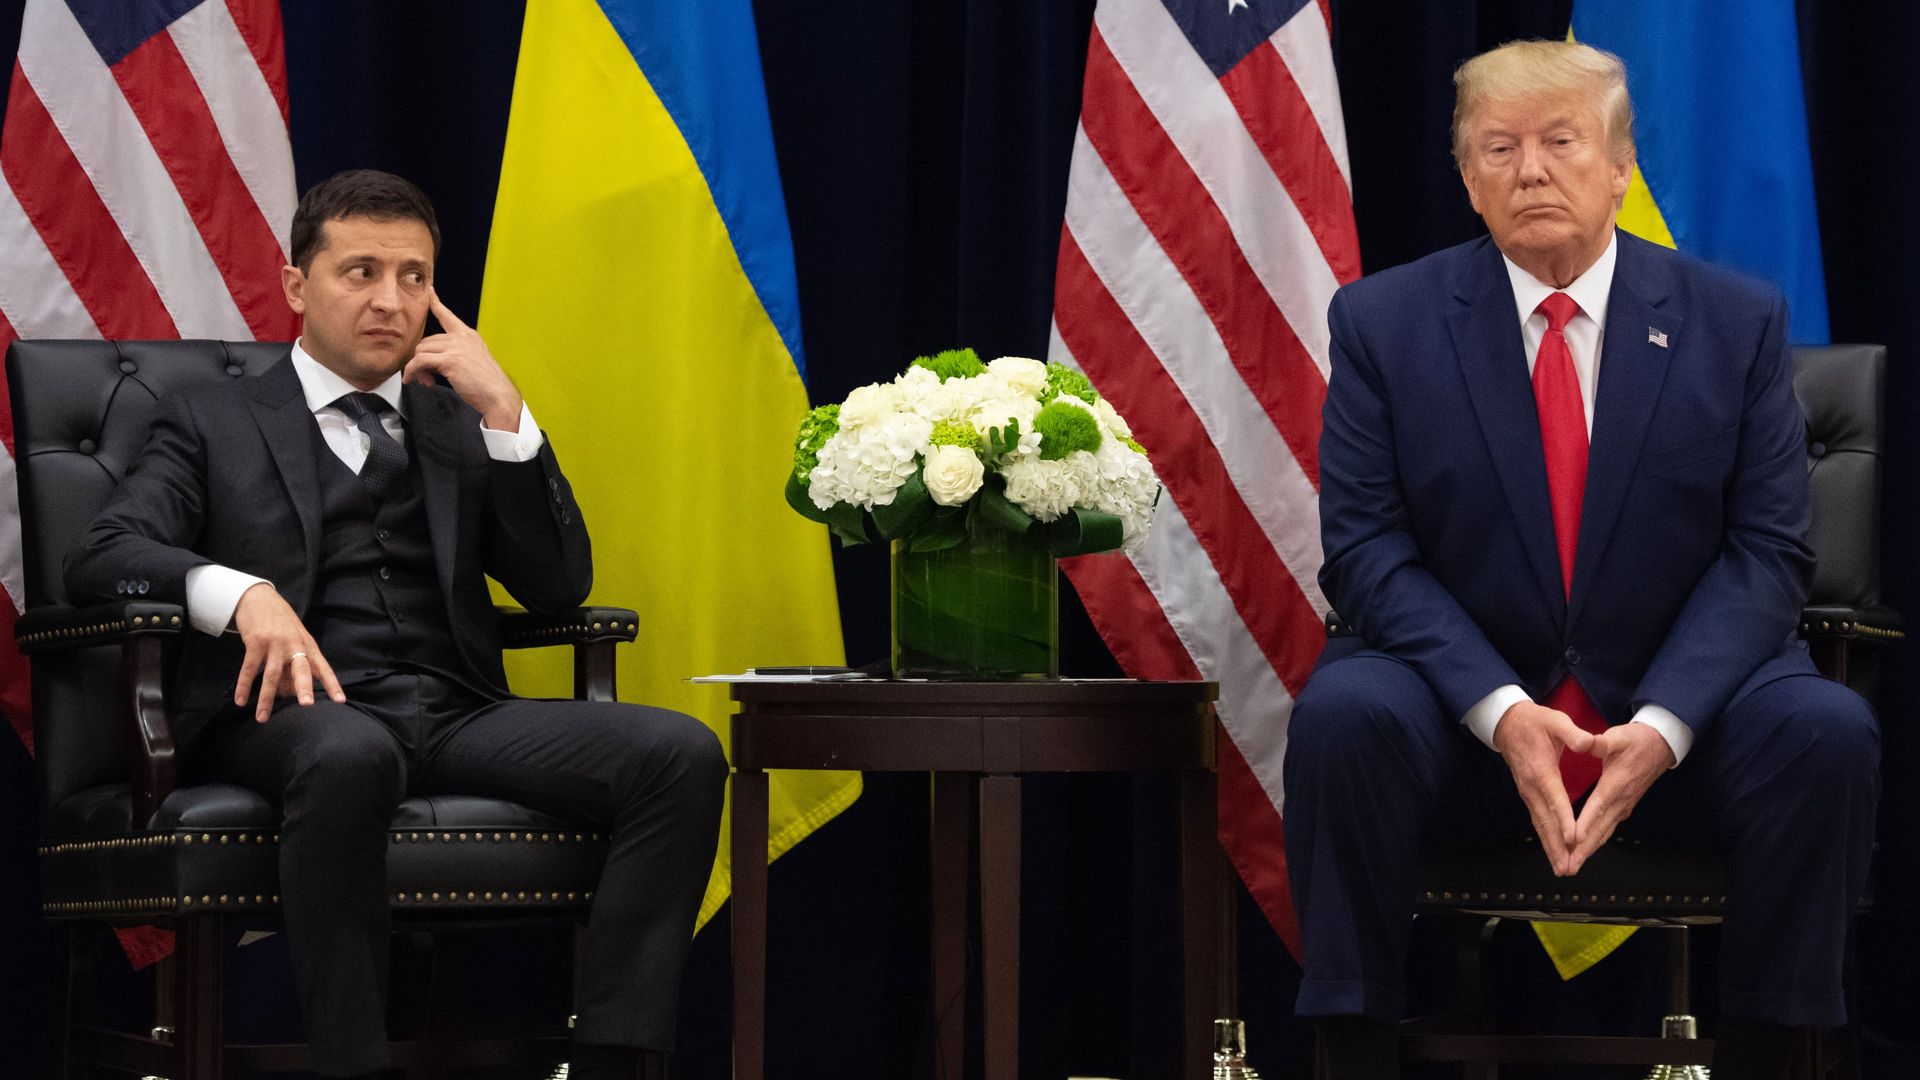 US President Donald Trump and Ukrainian President Volodymyr Zelensky looks on during a meeting